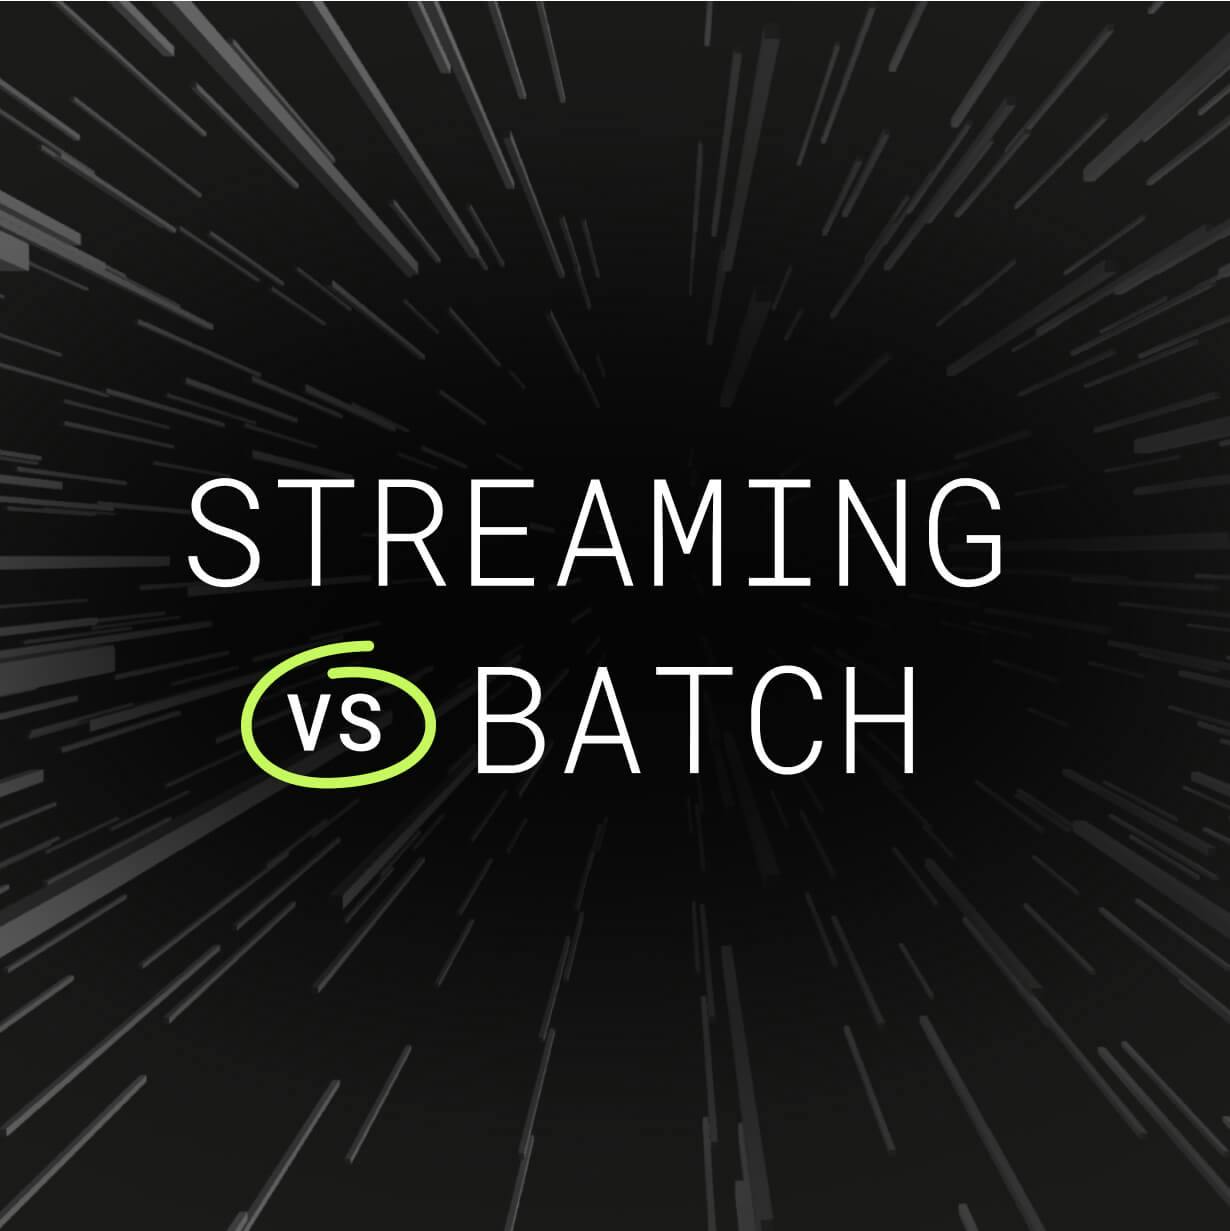 Streaming vs Batch